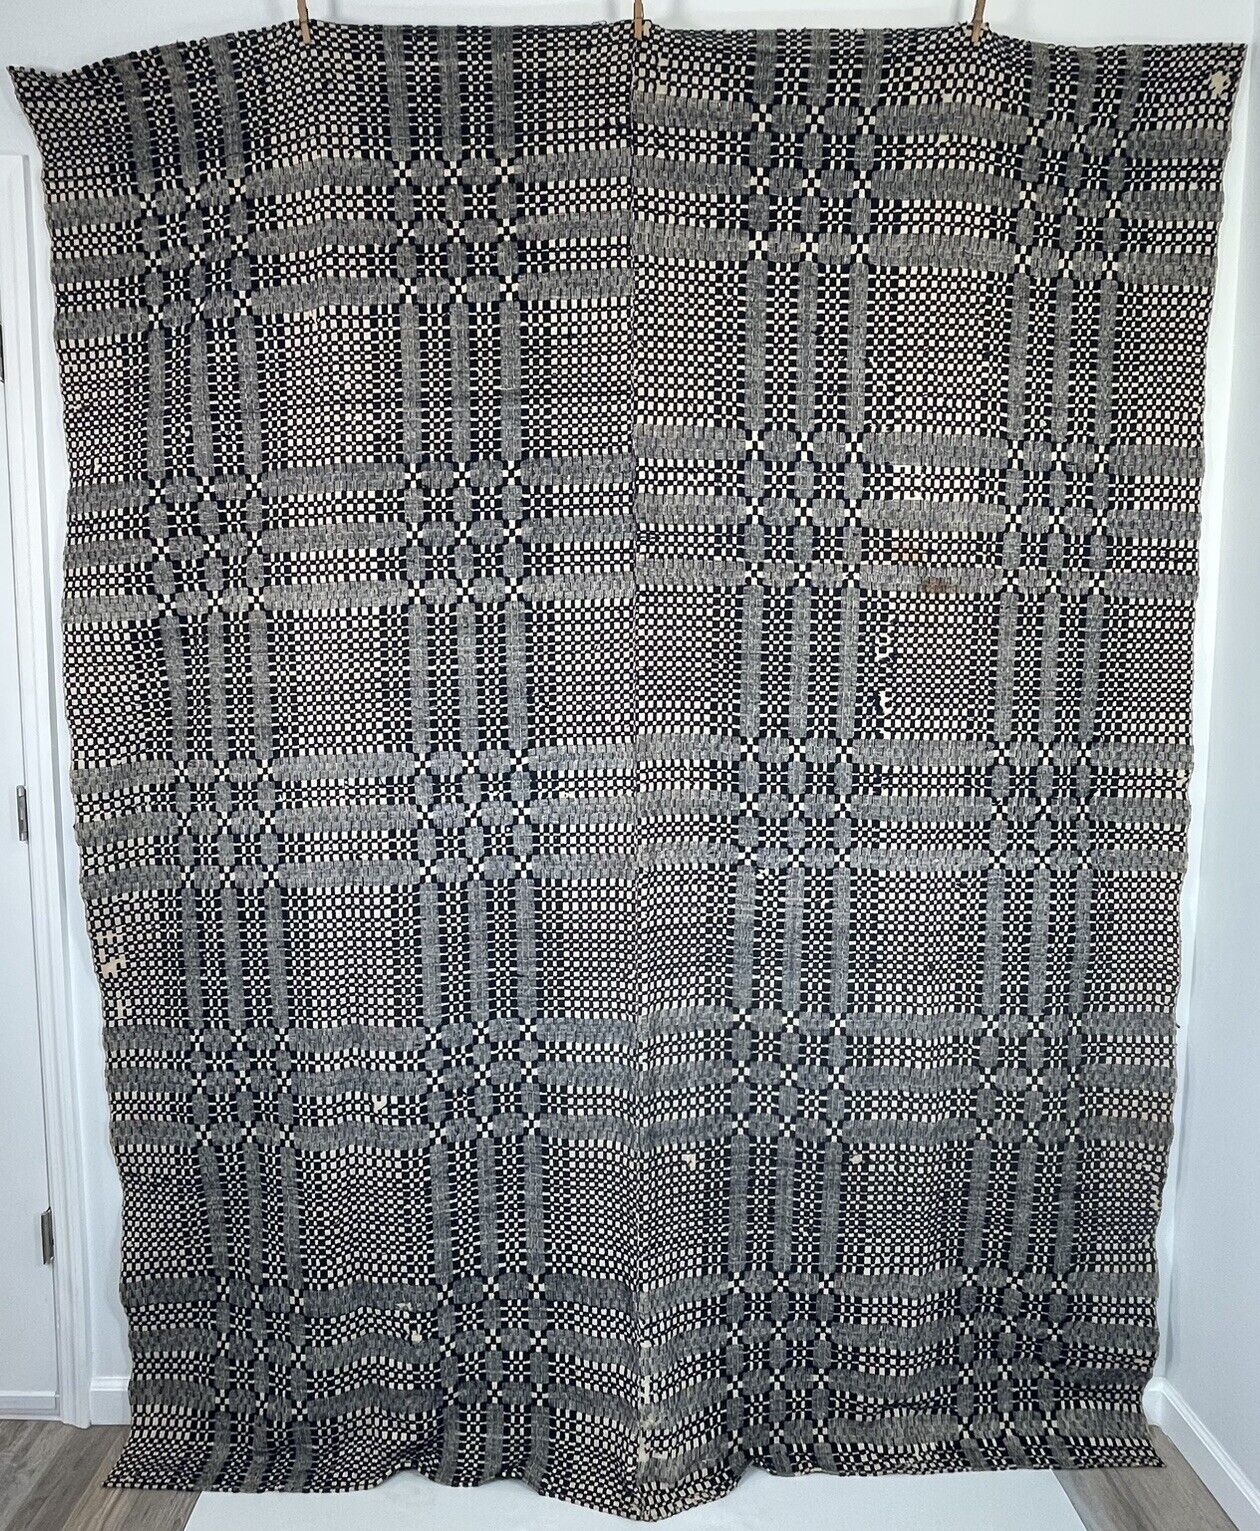 Antique Woven Wool & Linen Indigo Blue Cream Coverlet Bedspread 2 Panel 91